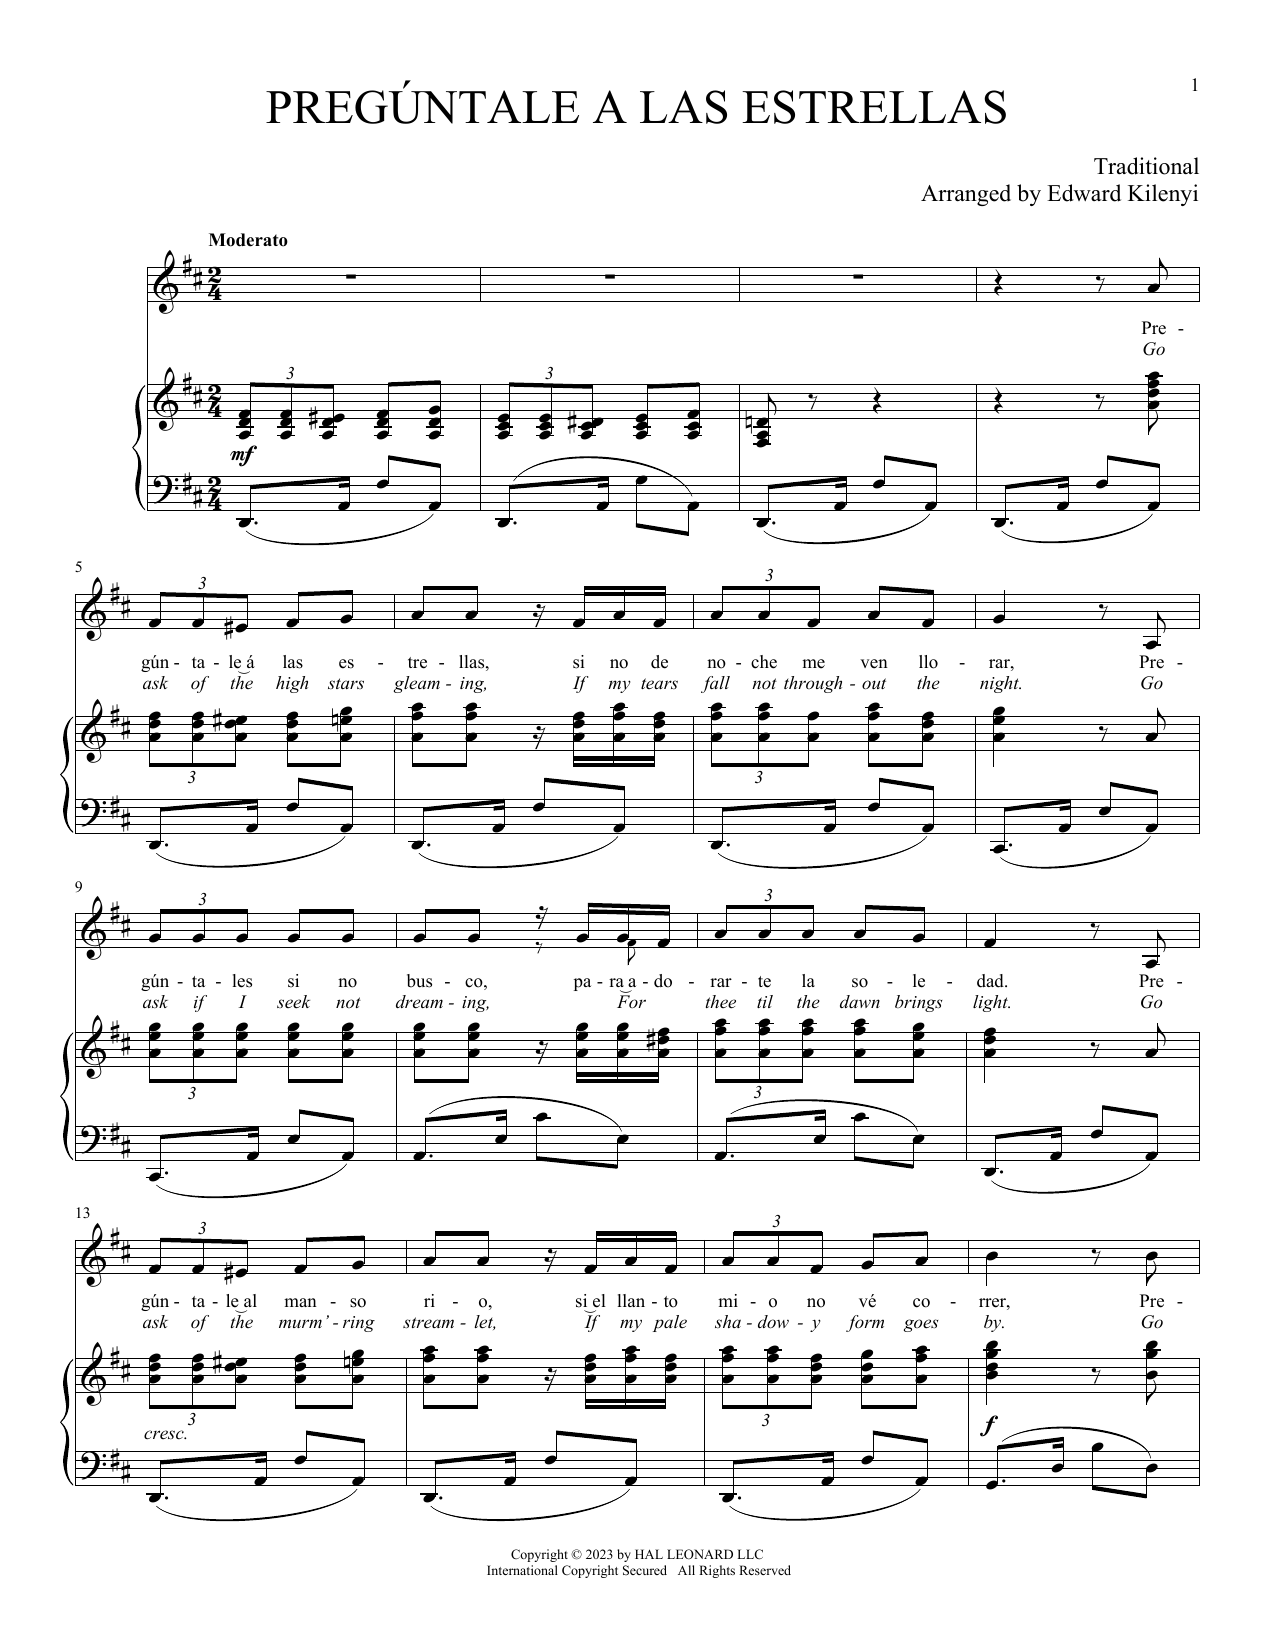 Traditional Pregúntale a las Estrellas Sheet Music Notes & Chords for Piano & Vocal - Download or Print PDF